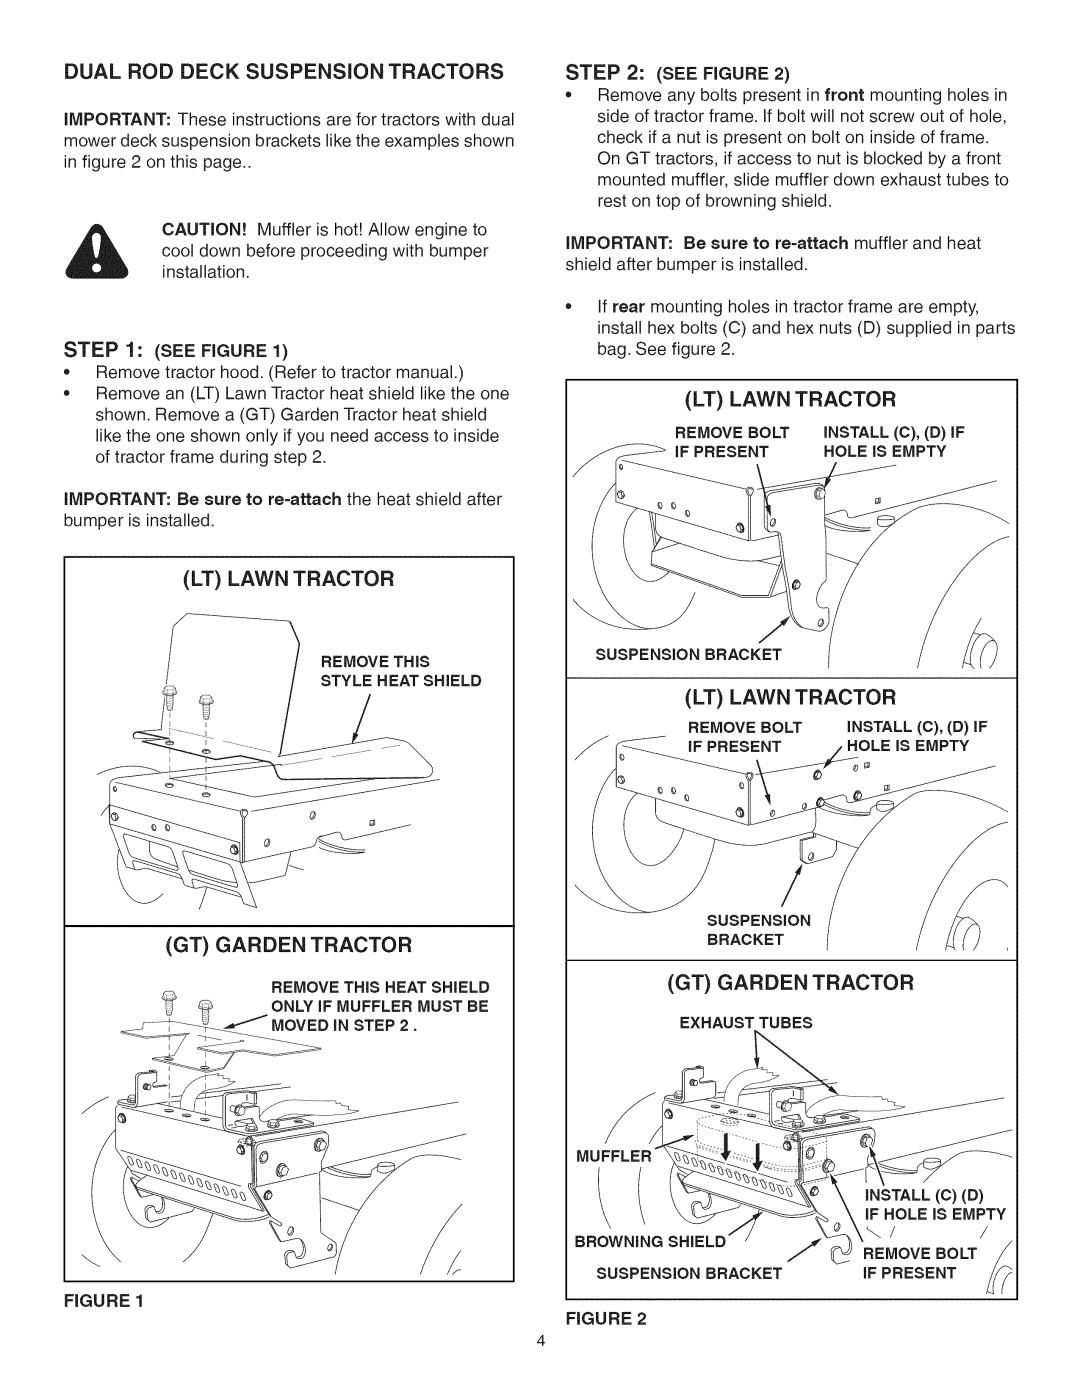 Craftsman 486.245992 manual Dual Rod Deck Suspension Tractors, Lt Lawn Tractor, Gt Garden Tractor, See Figure, iF PRESENT 